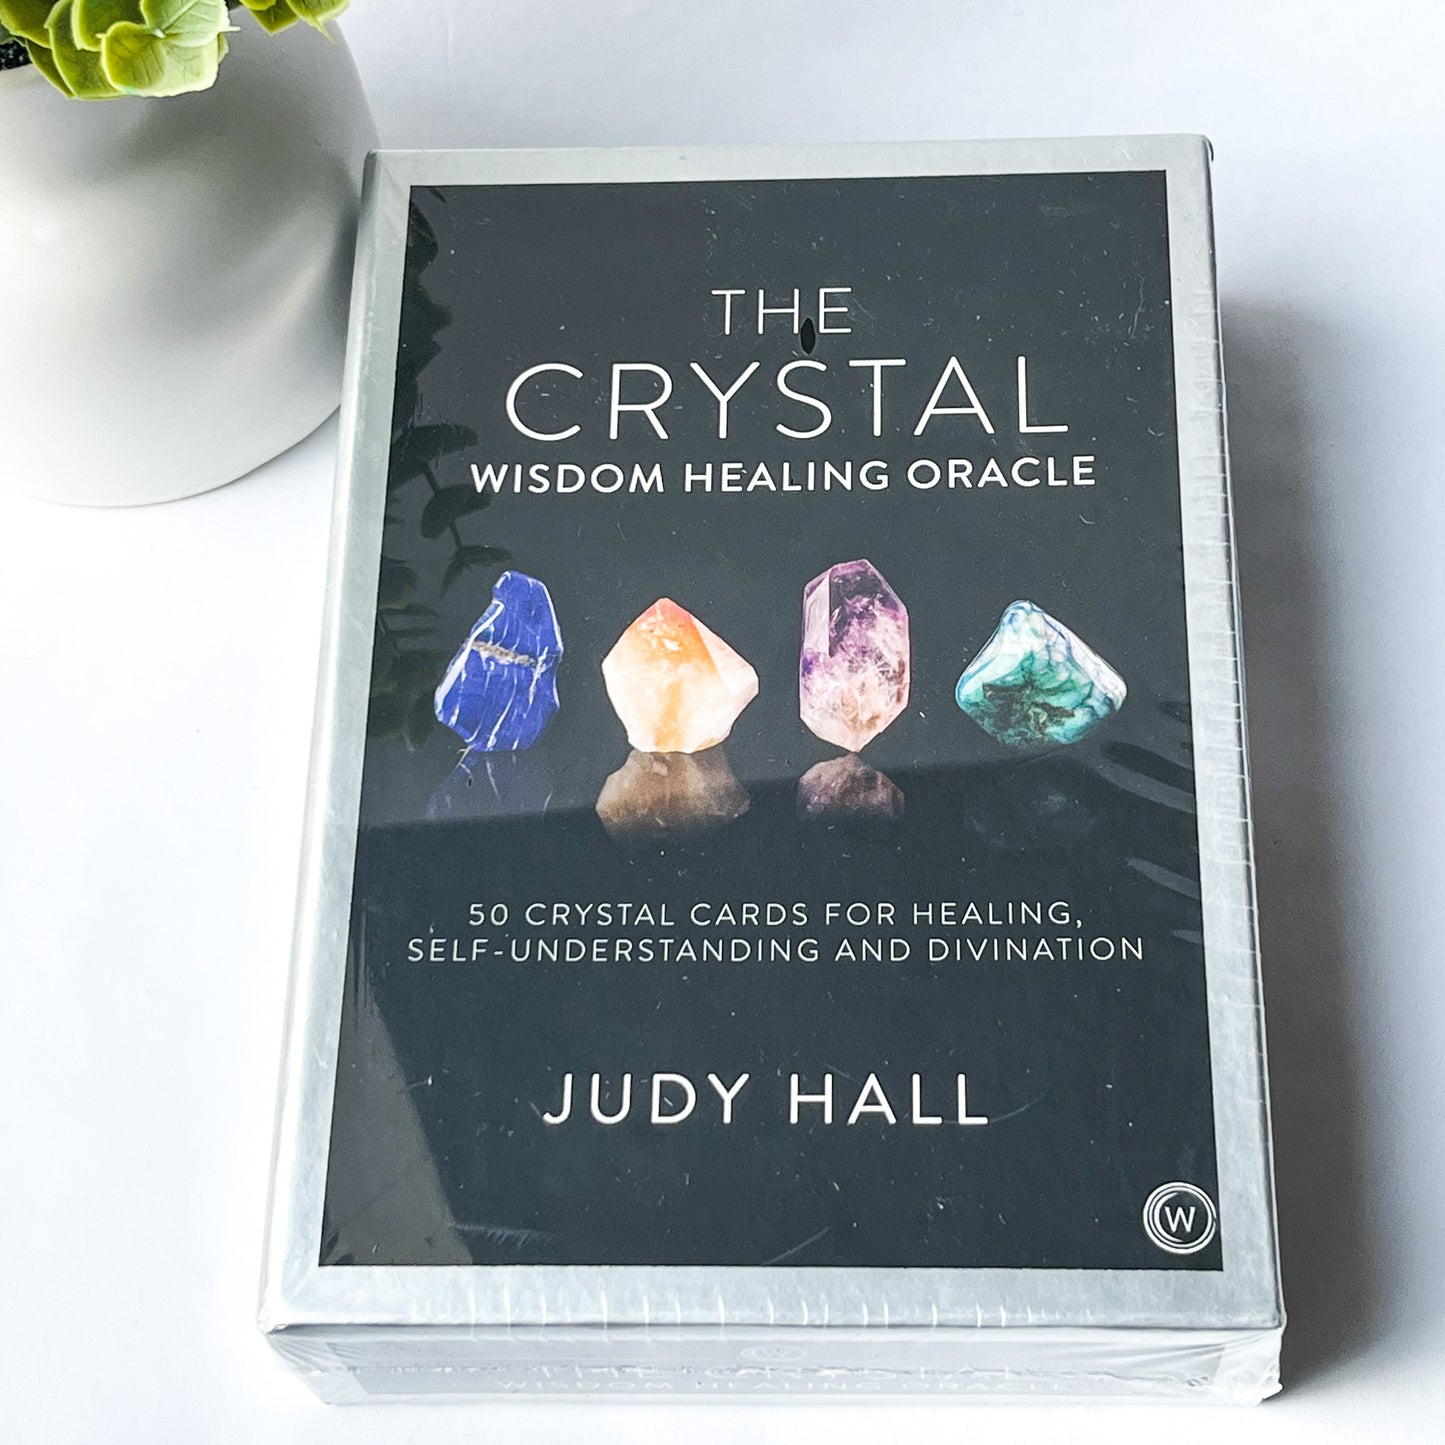 The Crystal Healing Wisdom Oracle - Judy Hall